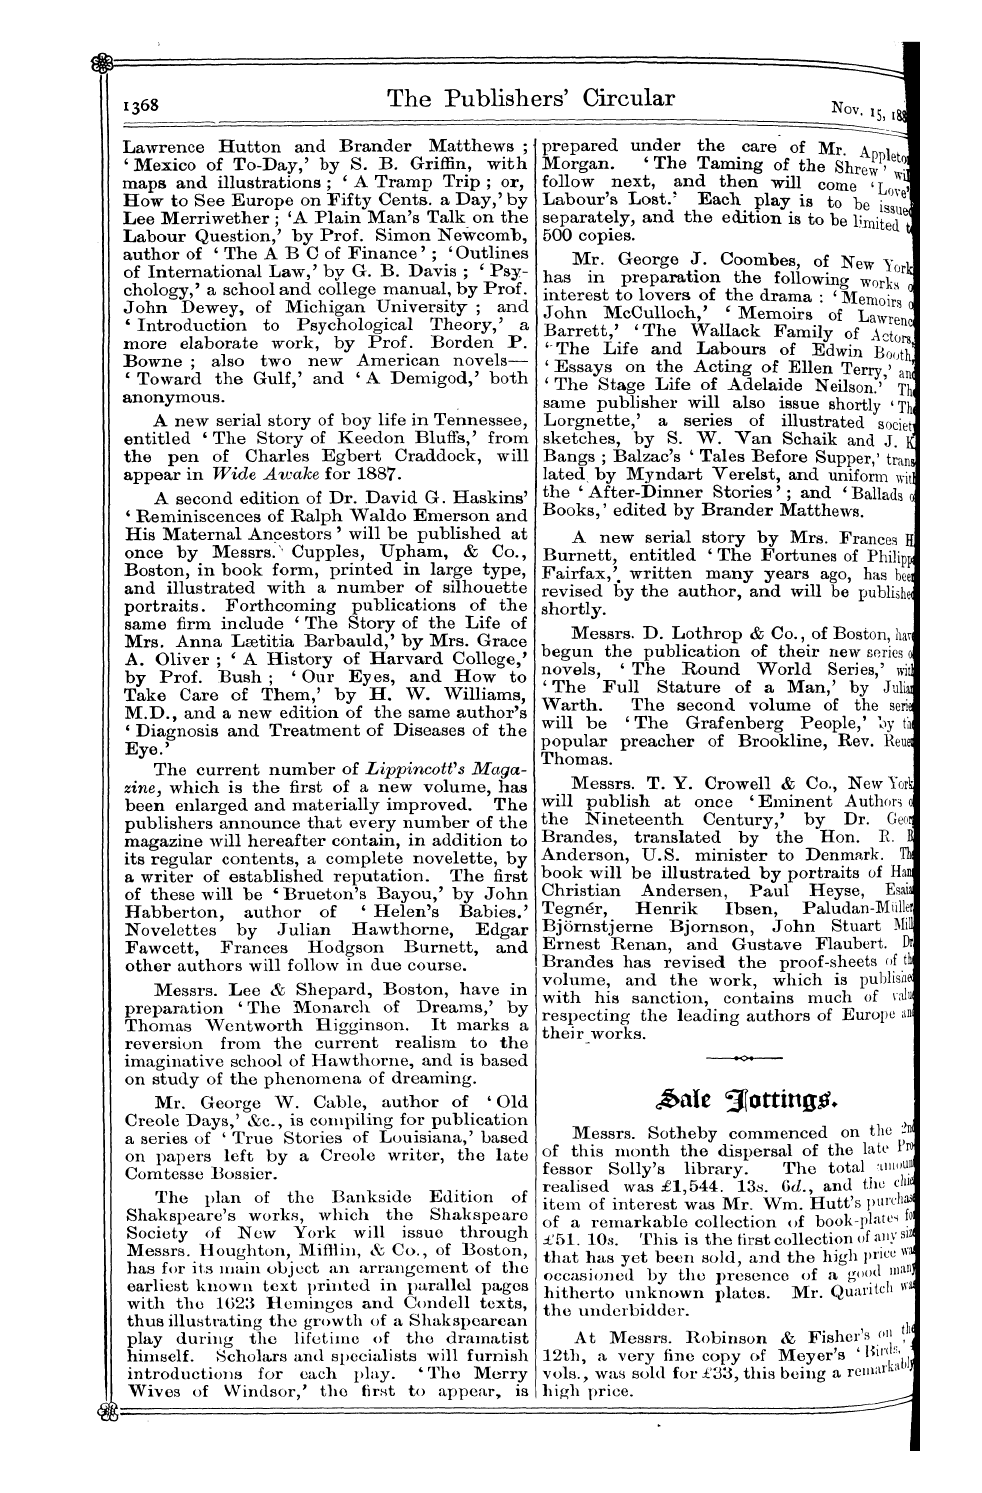 Publishers’ Circular (1880-1890): jS F Y, 1st edition - ^Alc Slotting^.